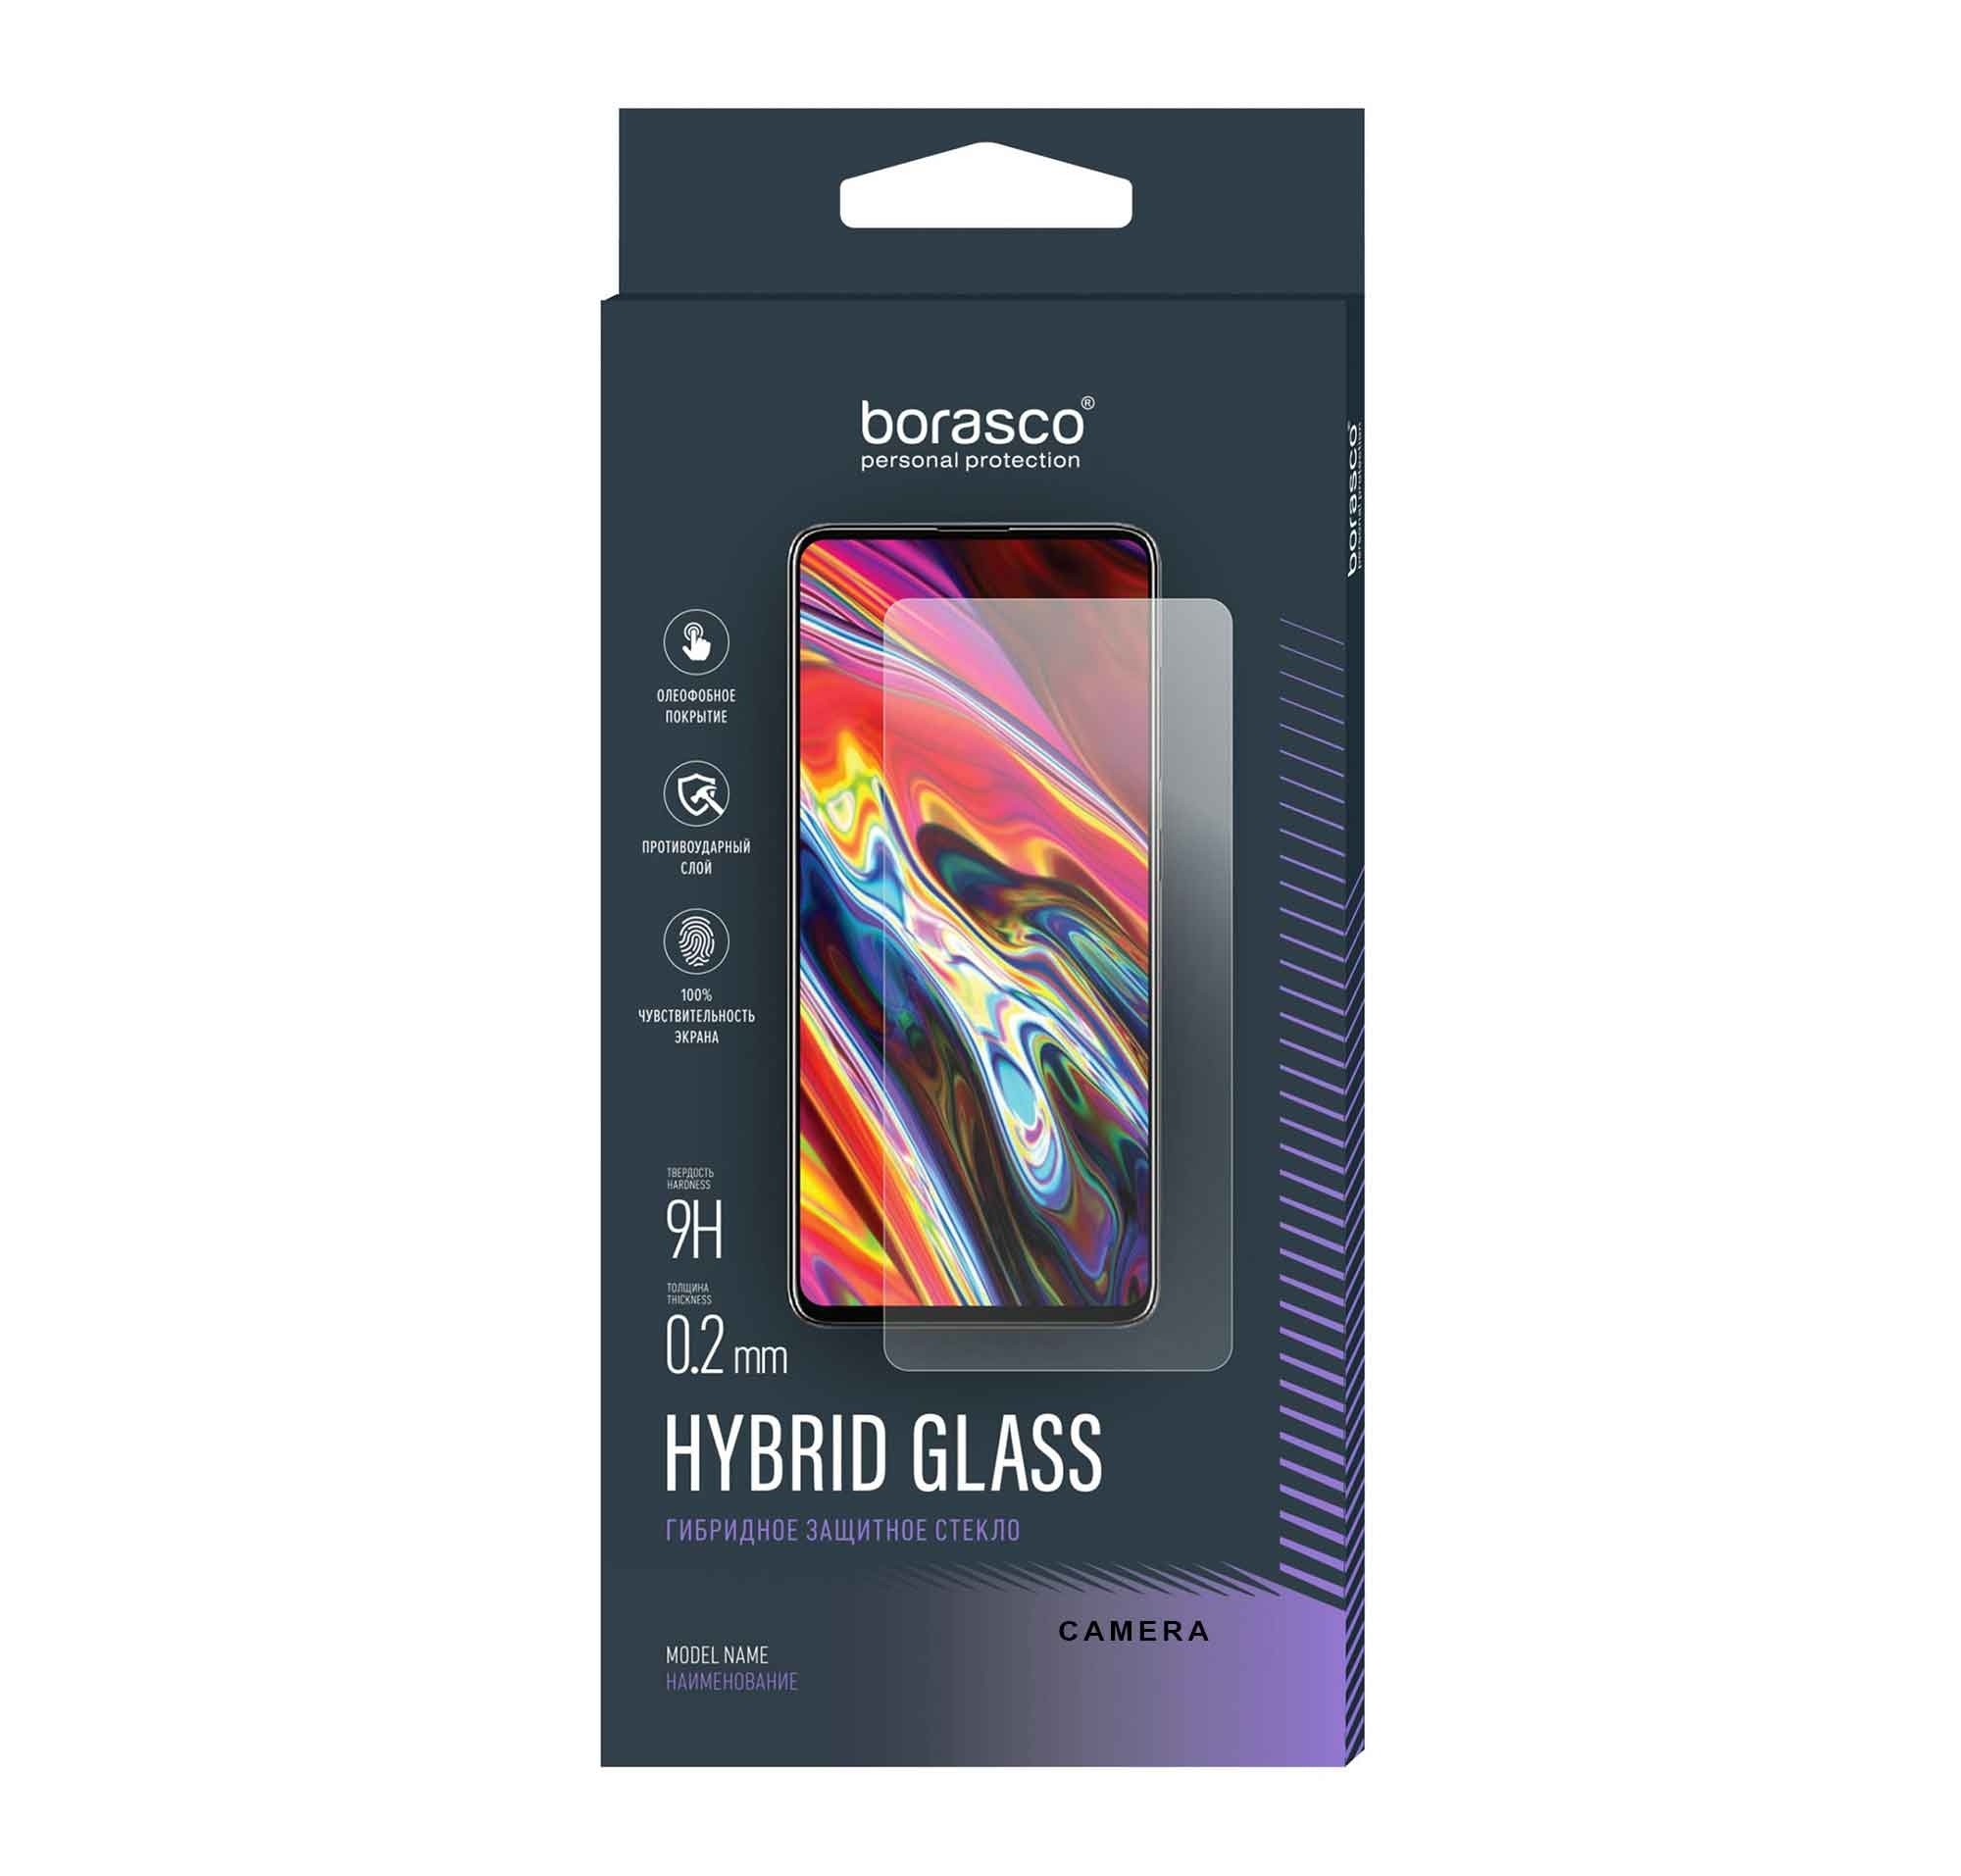 Стекло защитное BoraSCO (Экран+Камера) Hybrid Glass для Oukitel F150 R2022 чехол mypads бакс банни и еда для oukitel f150 r2022 задняя панель накладка бампер